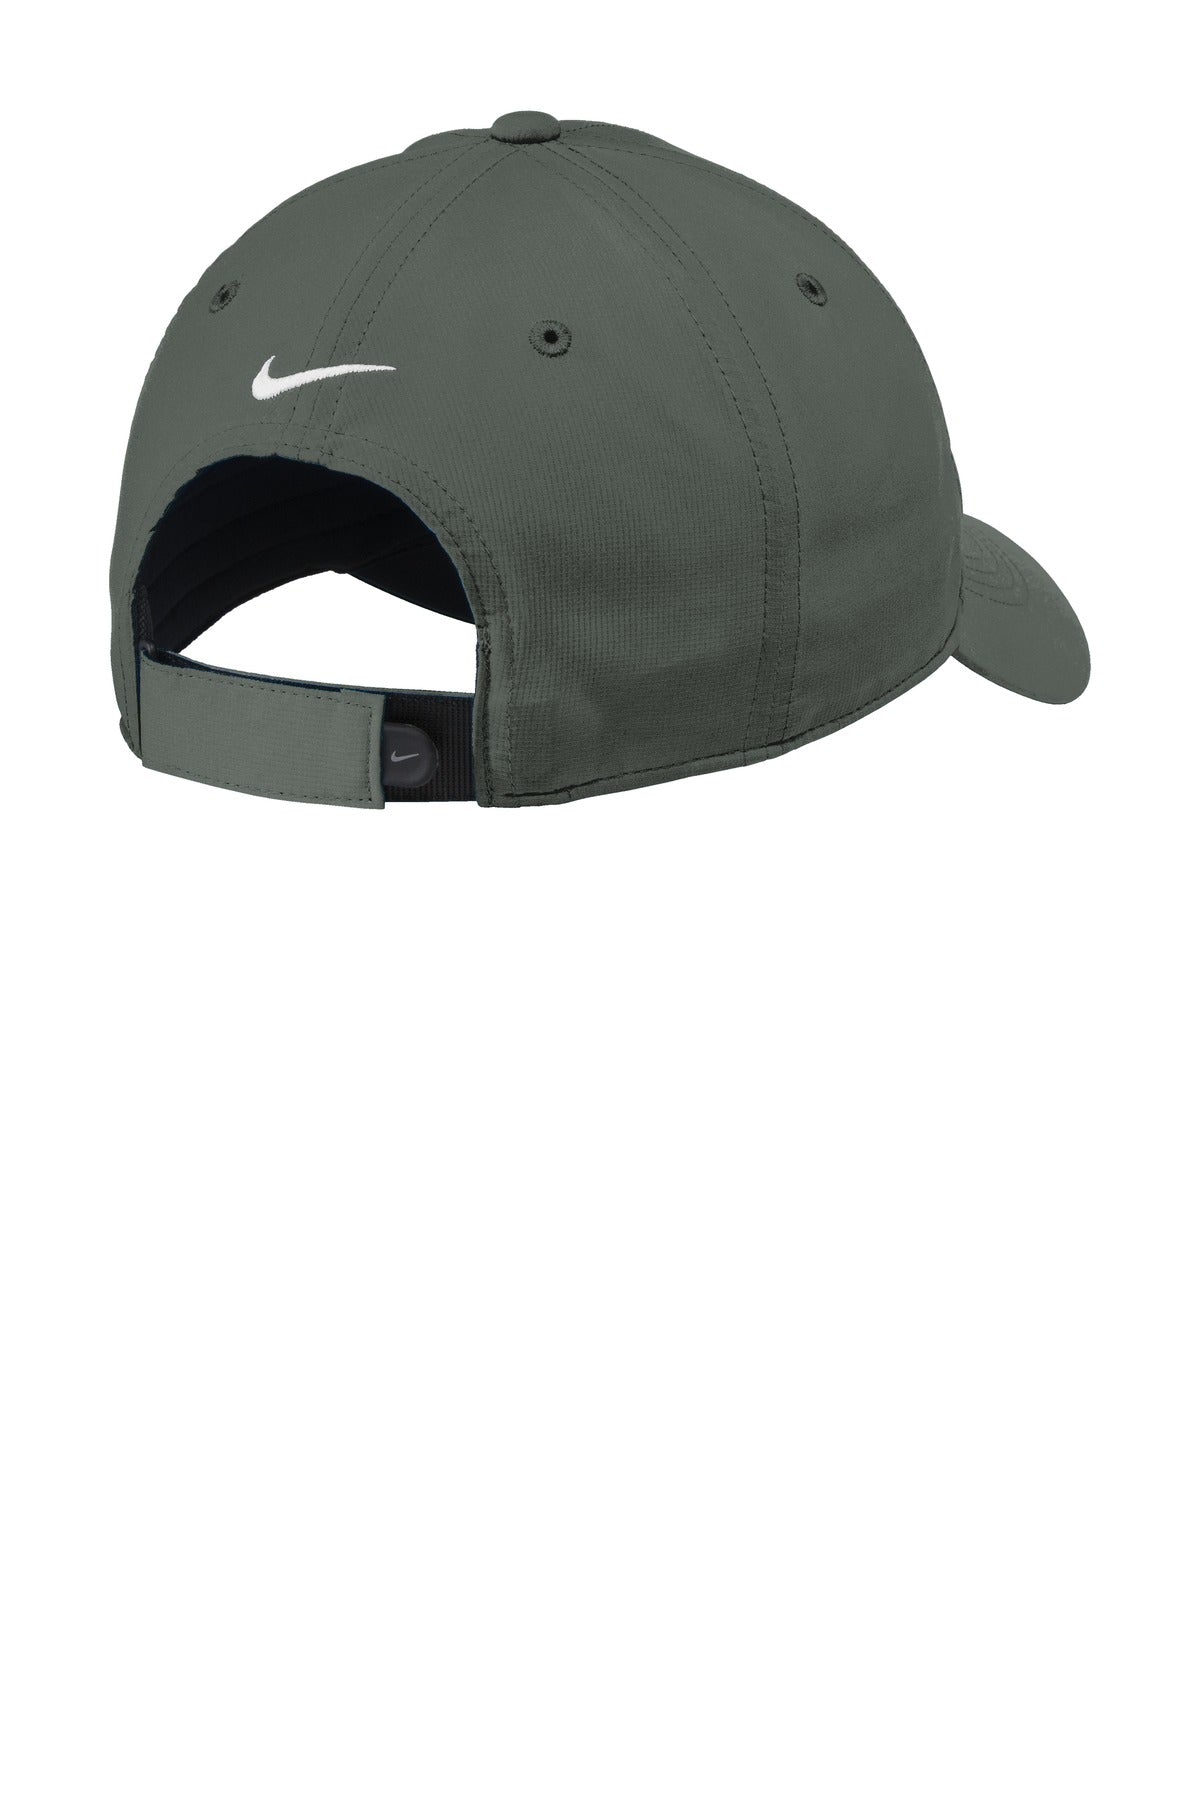 Nike Dri-FIT Tech Cap. NKAA1859 - DFW Impression